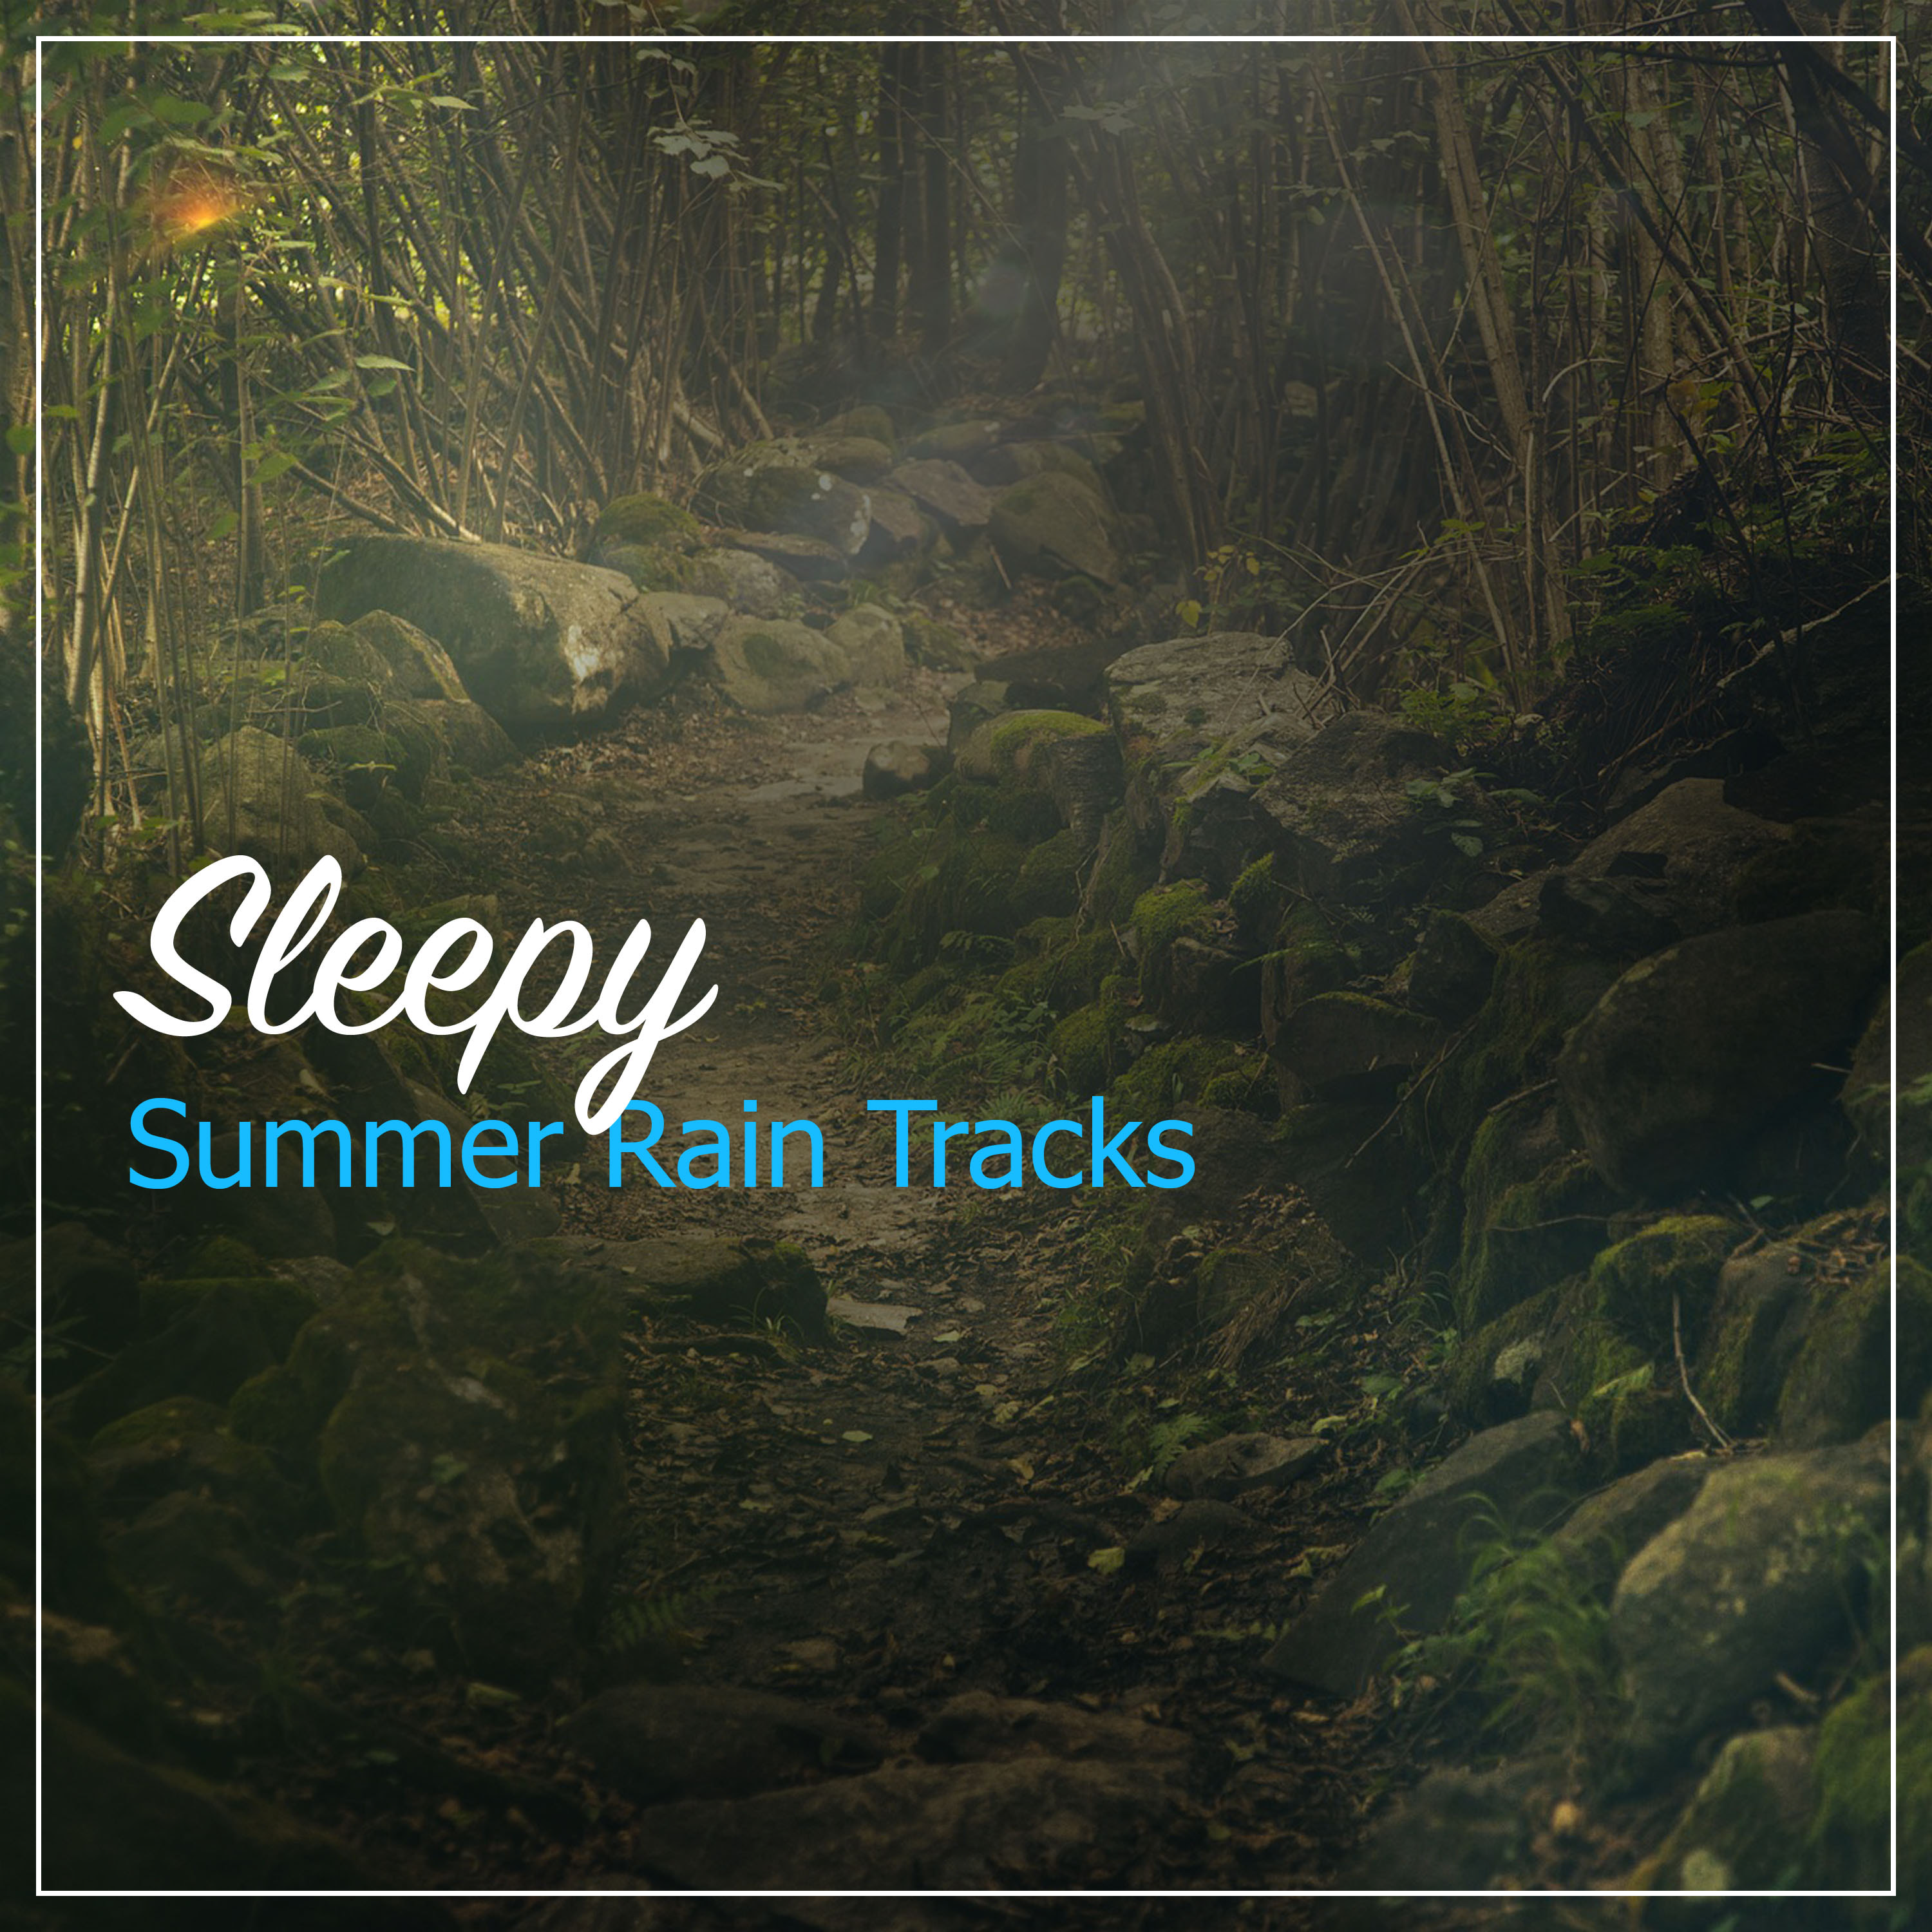 #10 Sleepy Summer Rain Tracks for Sleep and Relaxation